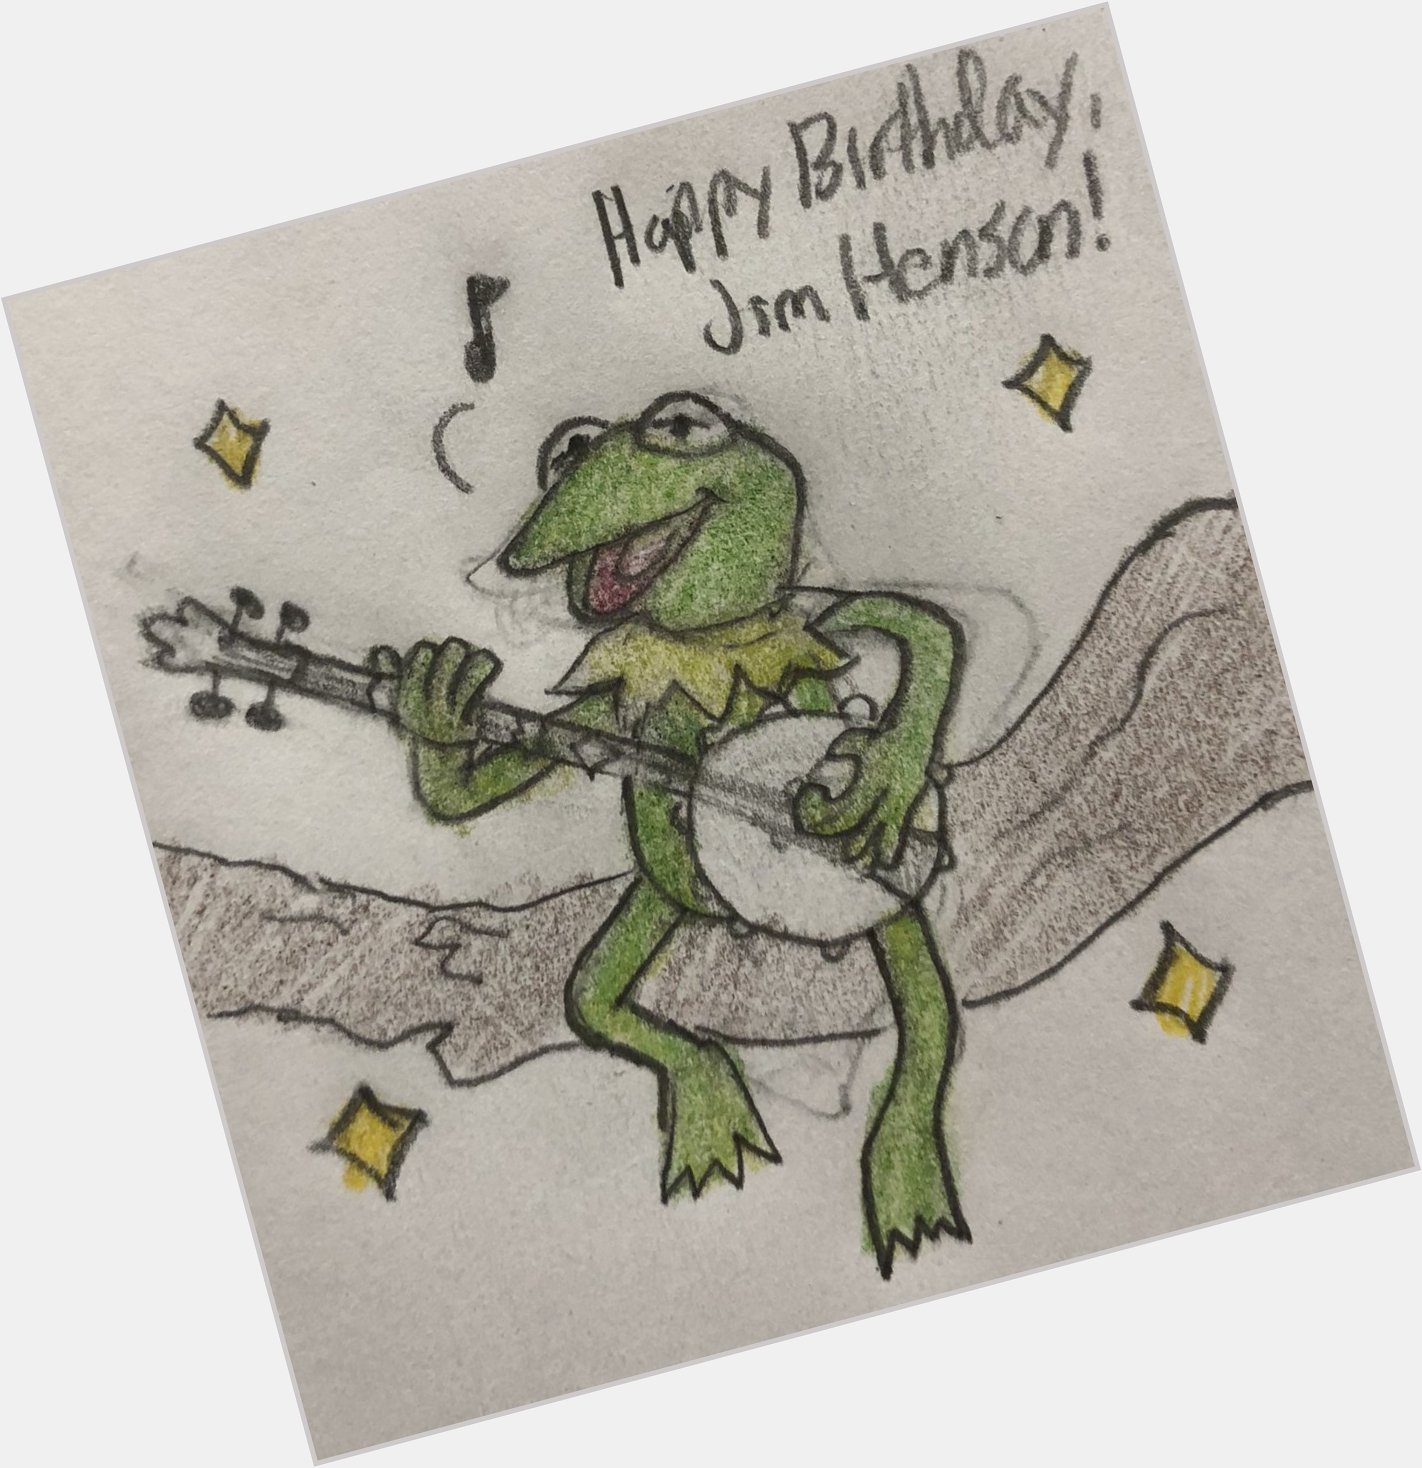 Happy Birthday to the late Jim Henson!   